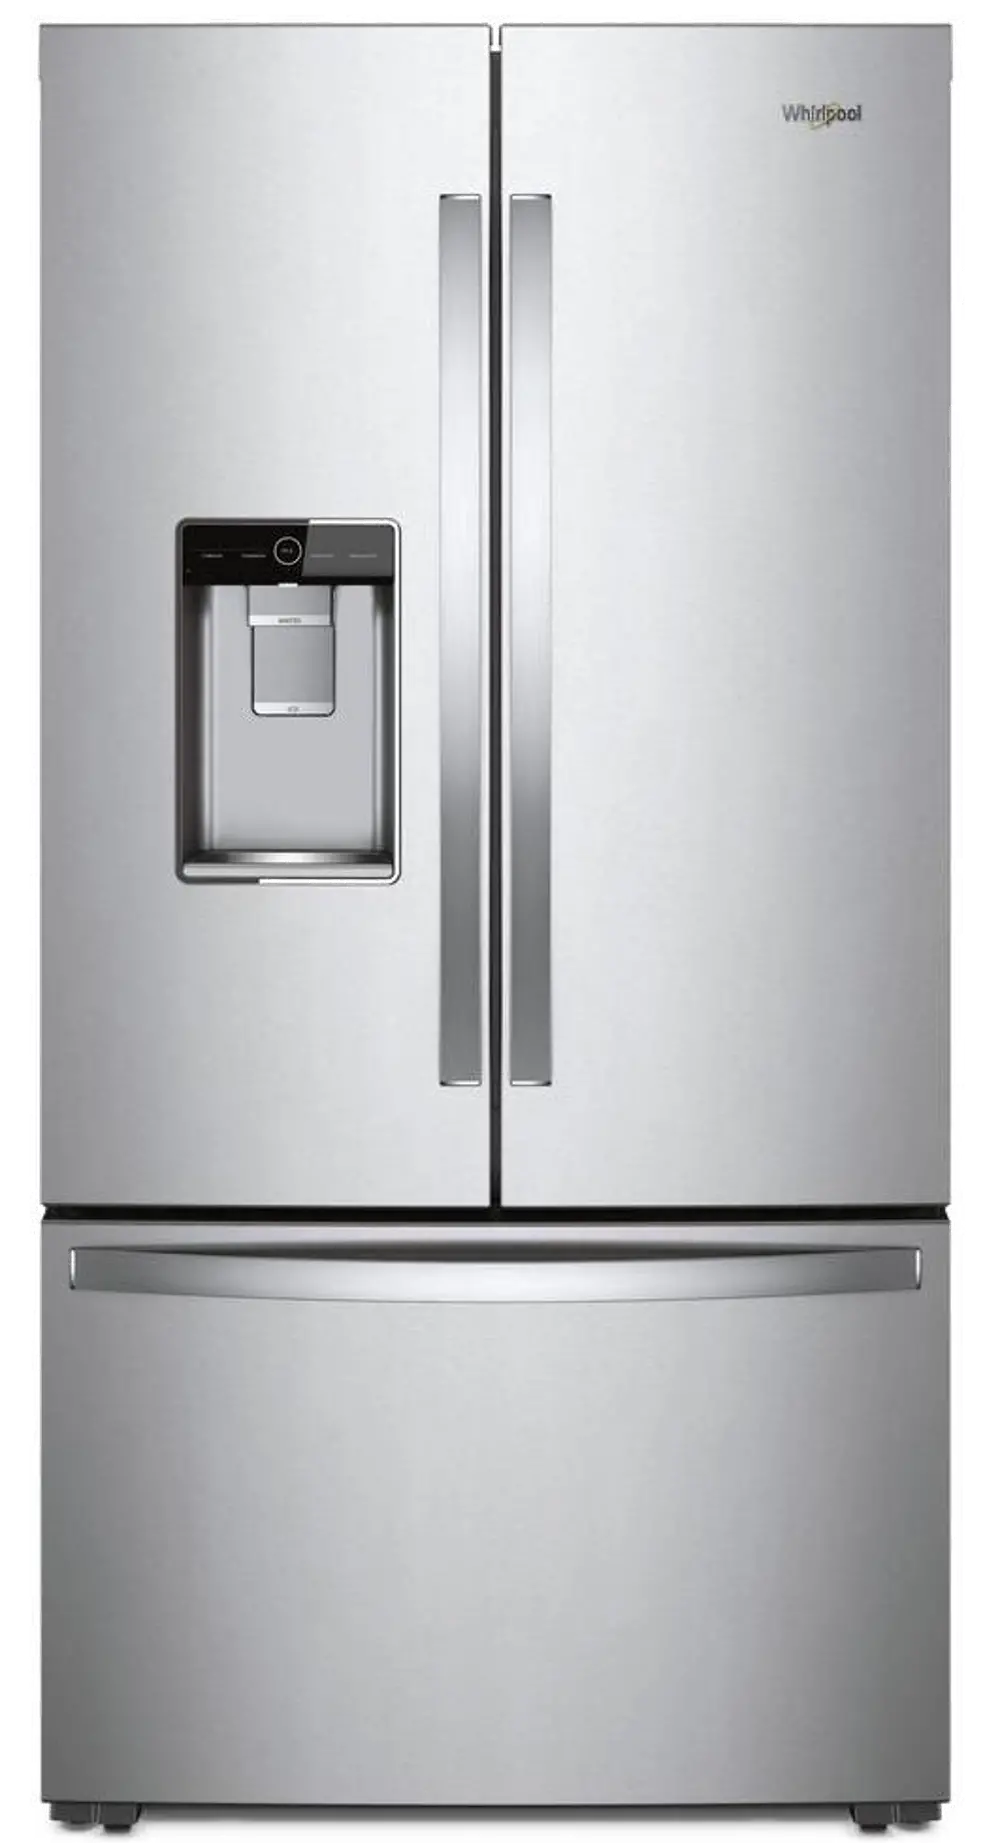 WRF954CIHZ Whirlpool Counter Depth French Door Refrigerator - 23.8 cu. ft., 36 Inch Stainless Steel-1